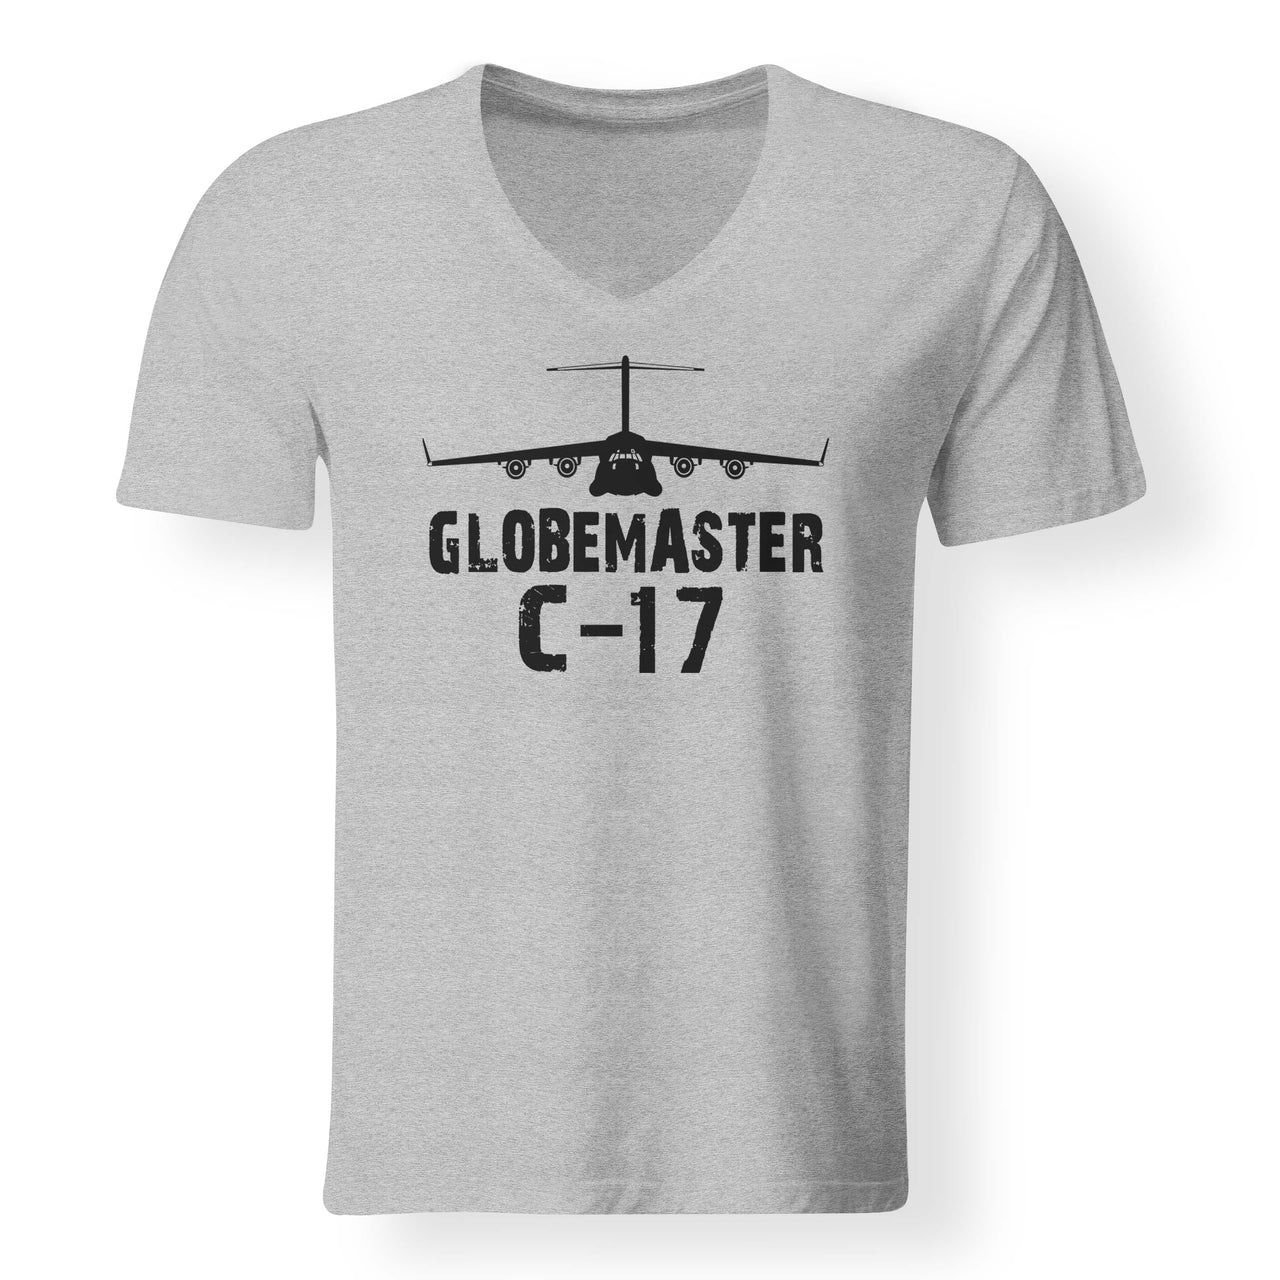 GlobeMaster C-17 & Plane Designed V-Neck T-Shirts